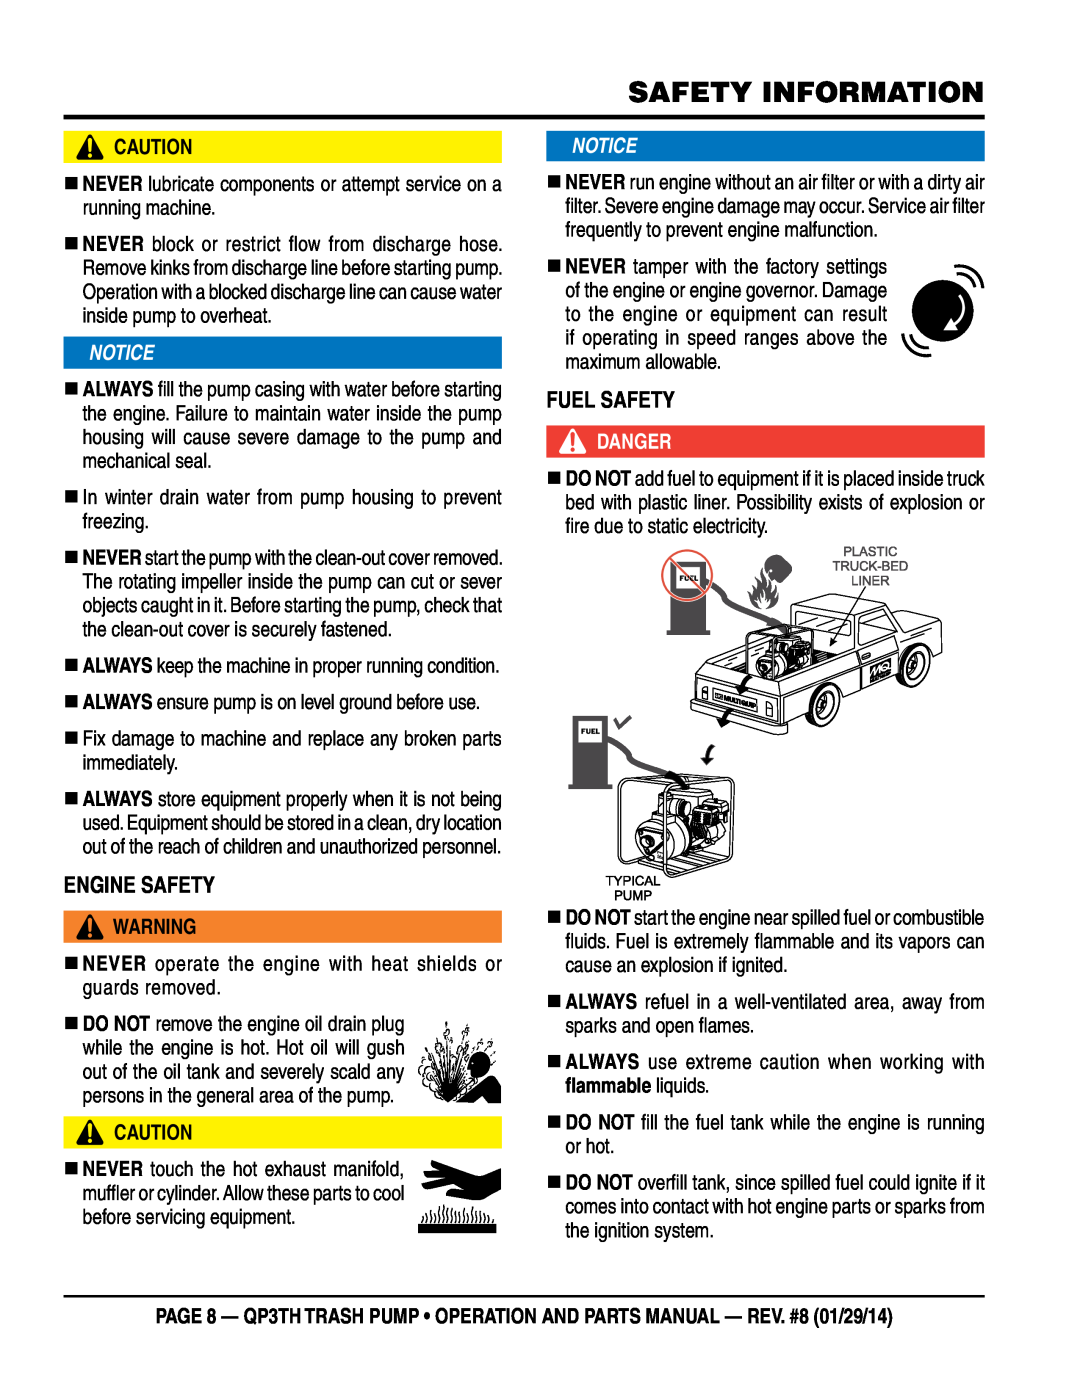 Multiquip QP3TH manual Engine Safety, Fuel Safety, Safety Information, Danger 